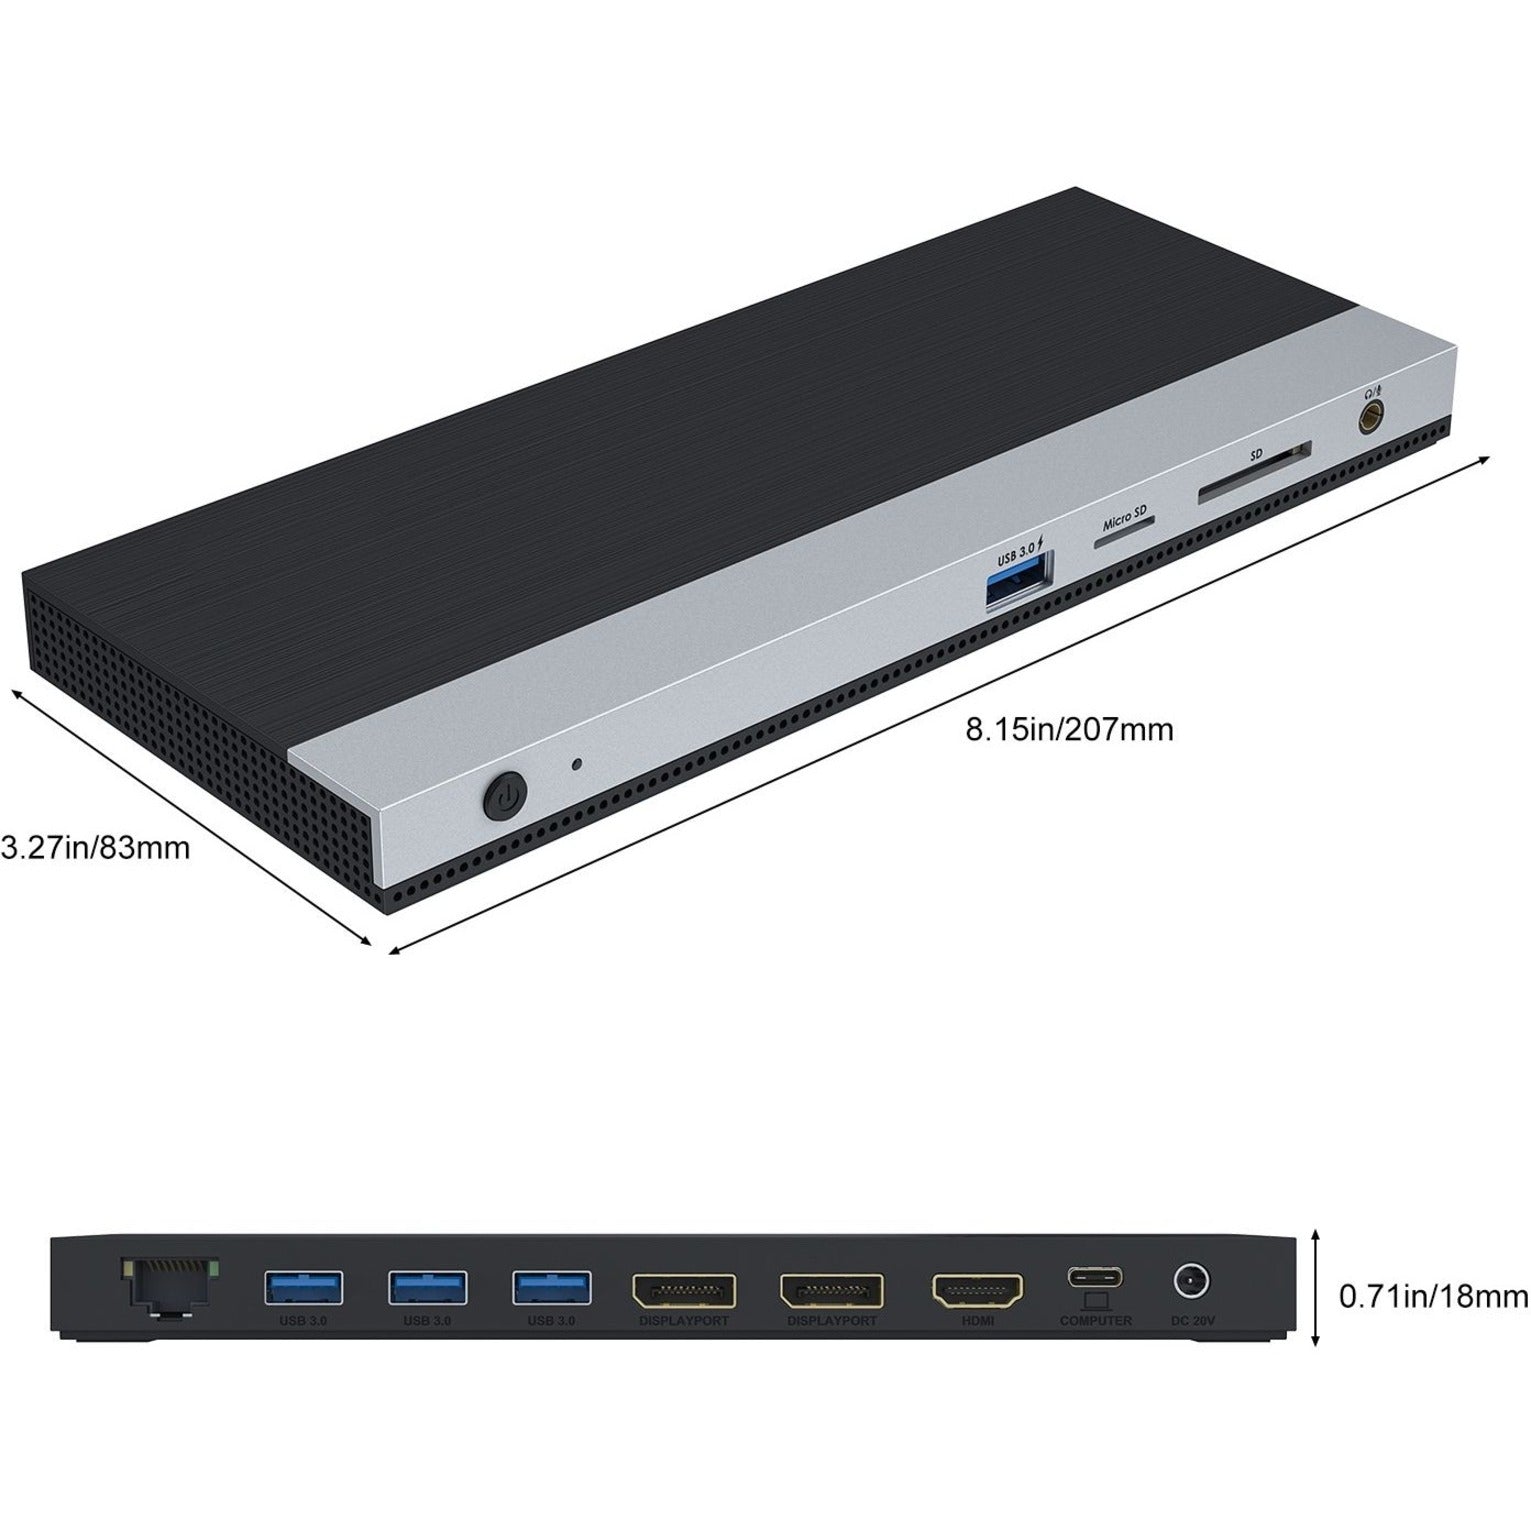 4XEM 4XUMD02 USB-C Triple Display Docking Station with Power Delivery (2 DP + 1HDMI), 4K HDMI, 2 DisplayPort, 4 USB 3.0 Ports, RJ-45 Ethernet, Headphone/Microphone Combo Port